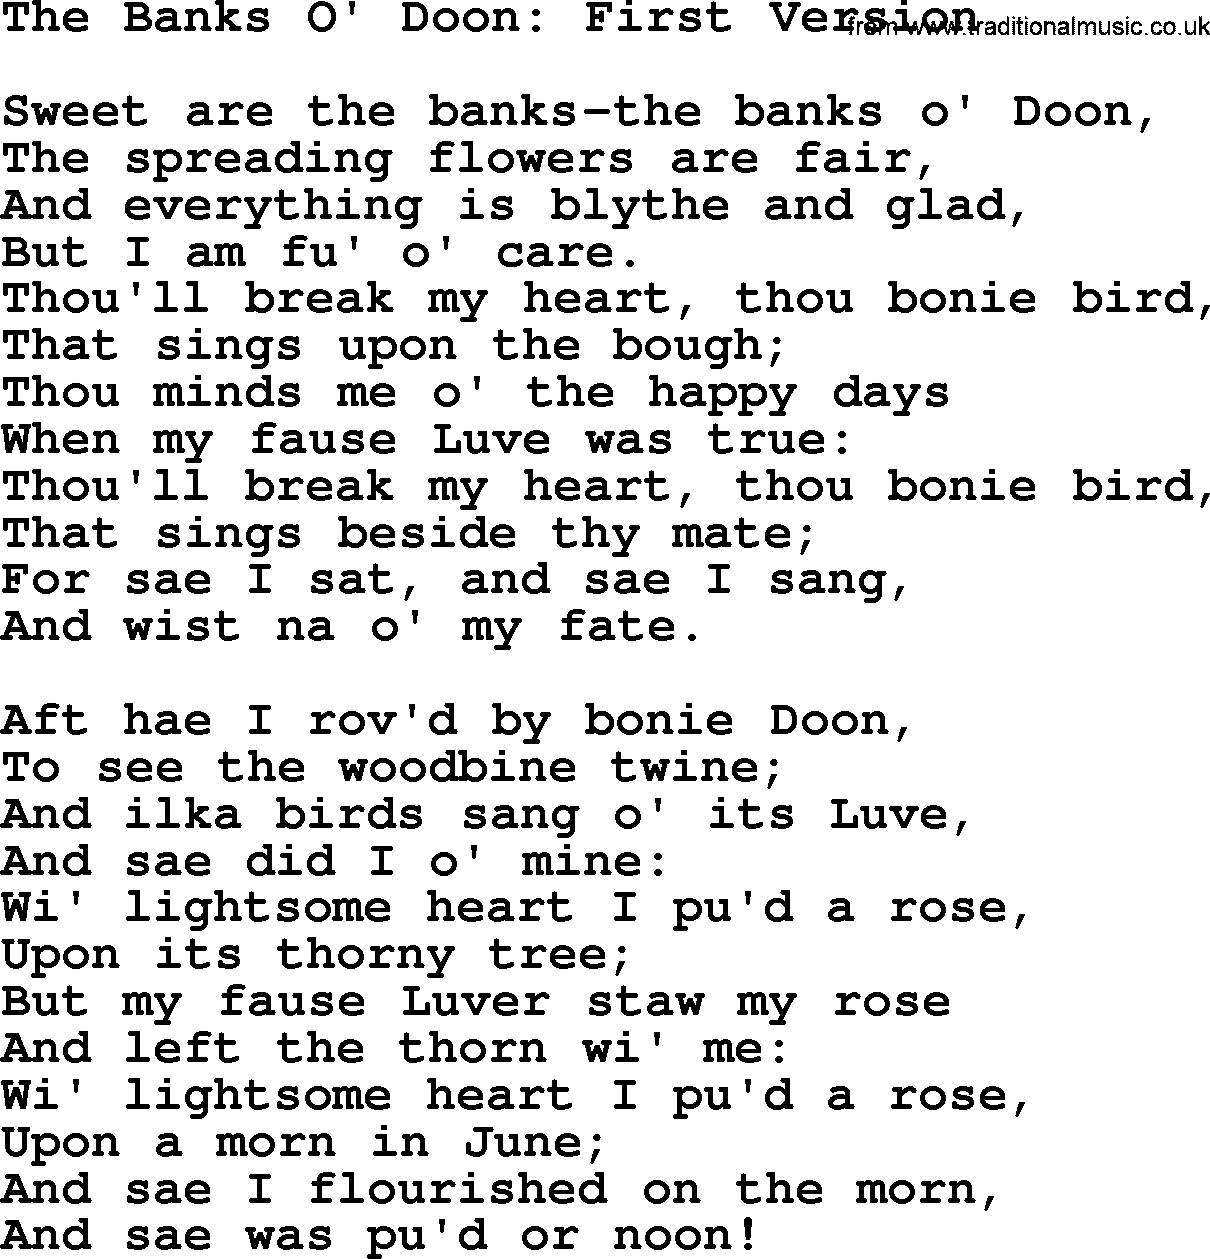 Robert Burns Songs & Lyrics: The Banks O' Doon First Version